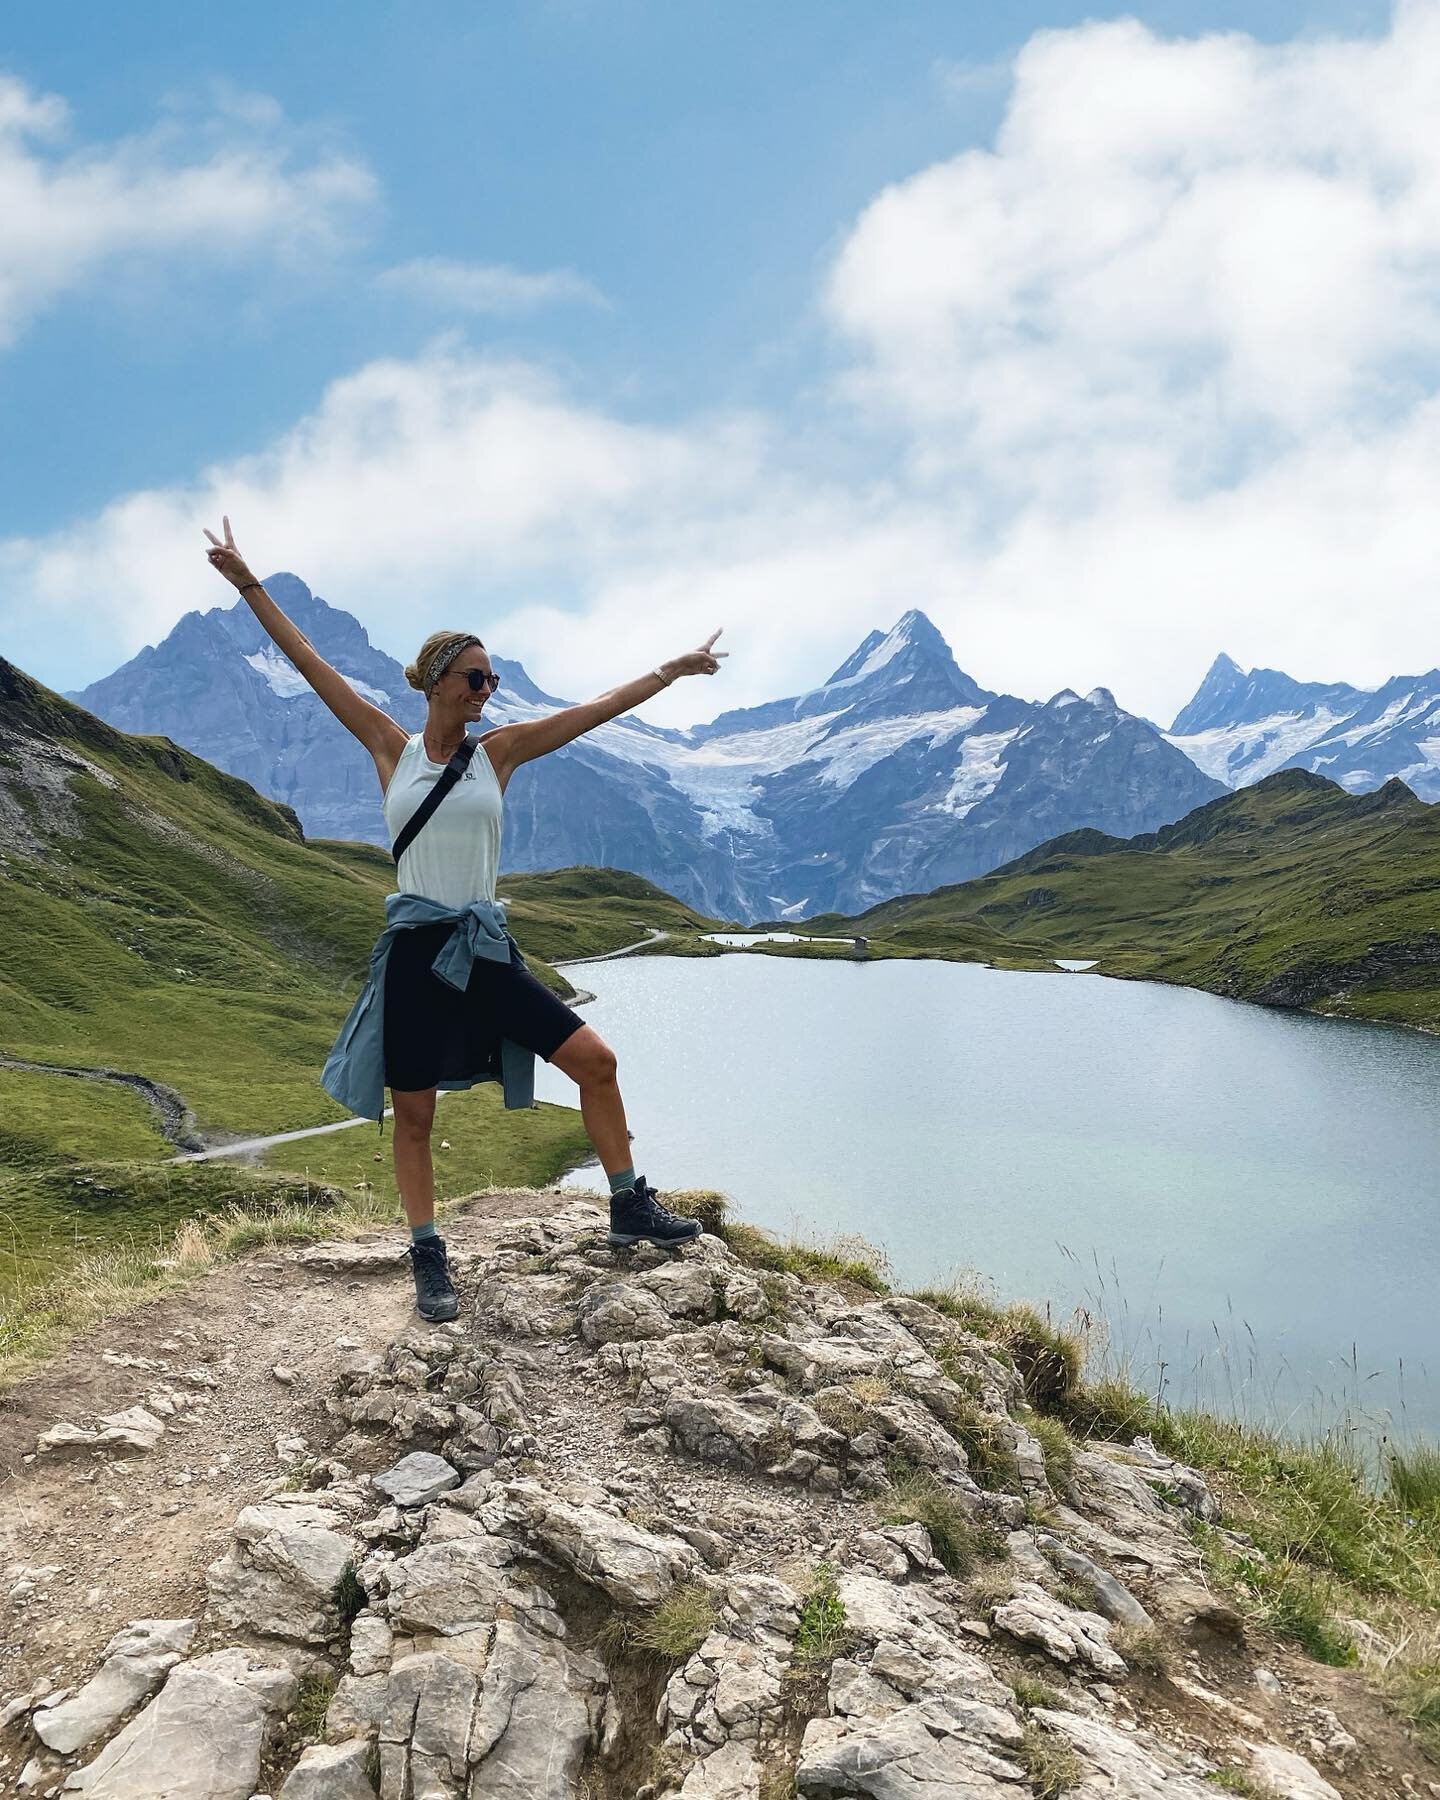 𝕎𝔸ℕ𝔻𝔼ℝ𝕃𝕌𝕊𝕋 🤍
Grindelwald - First - Faulhorn - M&auml;nndlenen - SchynigePlatte 
.
.
.
.
.
#amazing #hike #wonderful #nature #switzerland #outdoor #sport #fun #wanderlust #love #smile #happy #photography